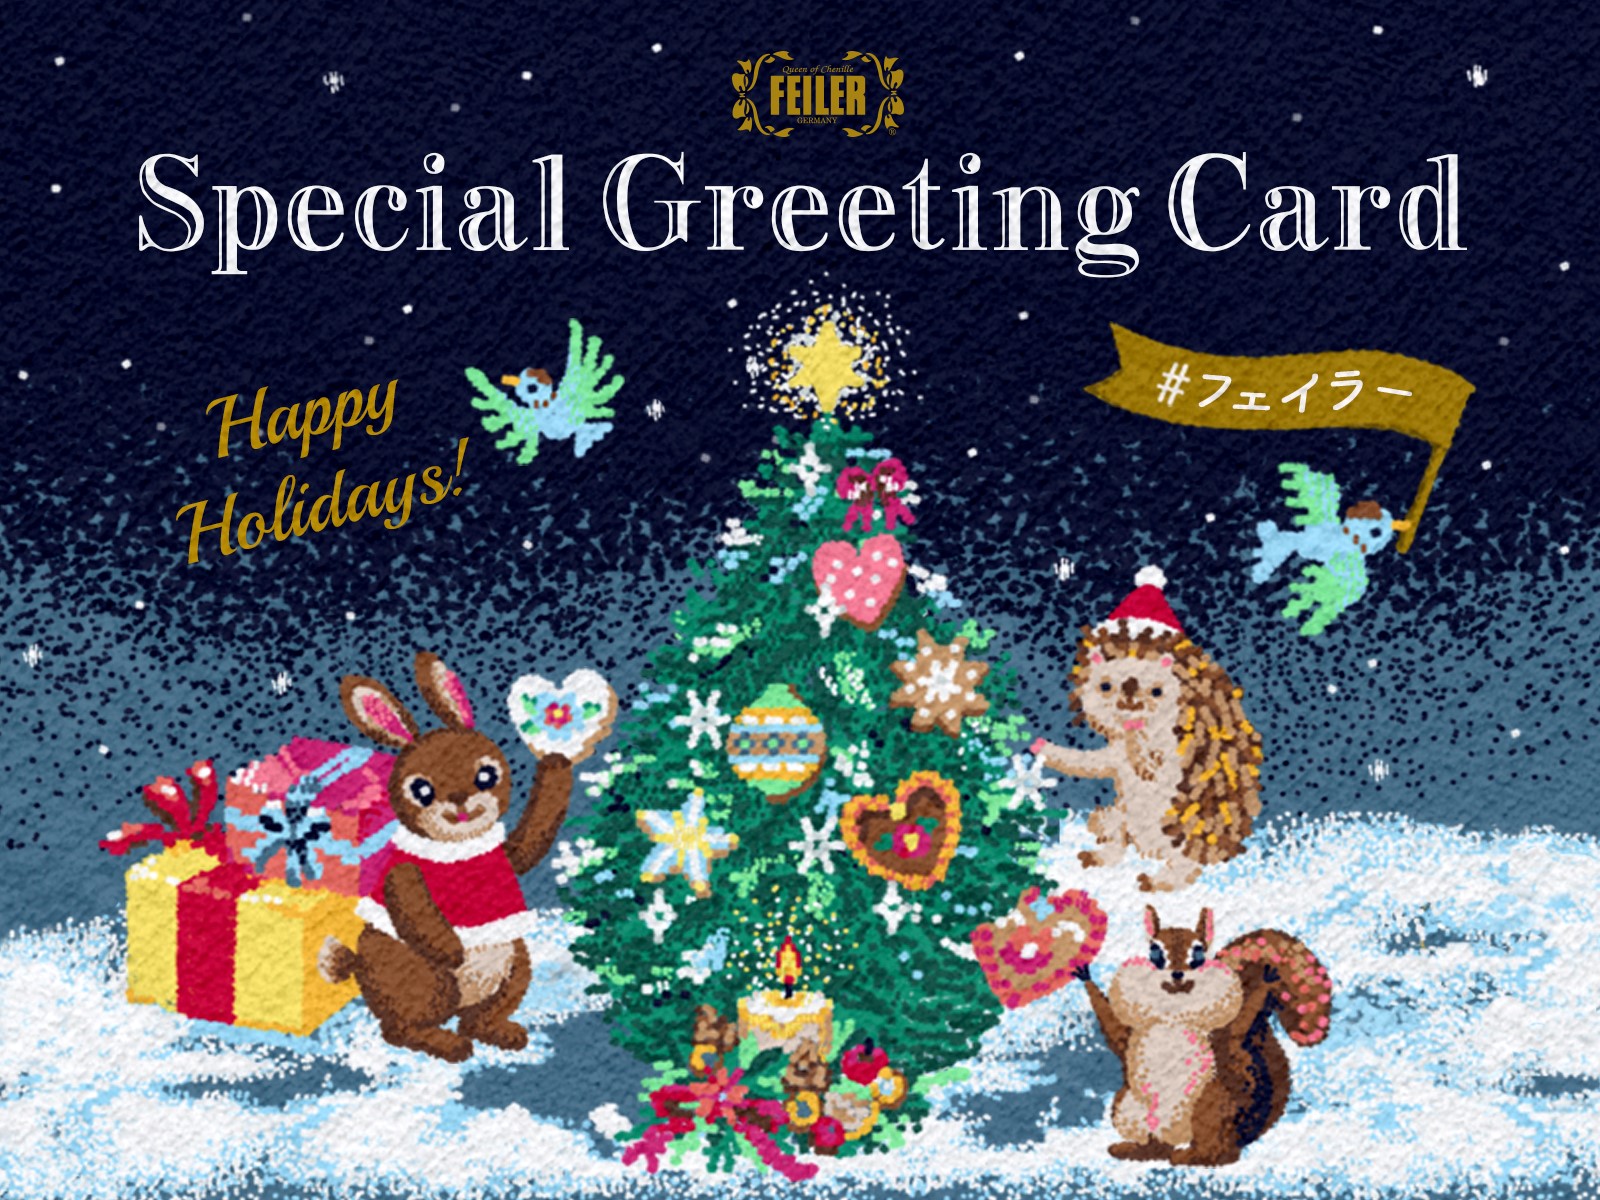 Feiler Special Greeting Card Newscast